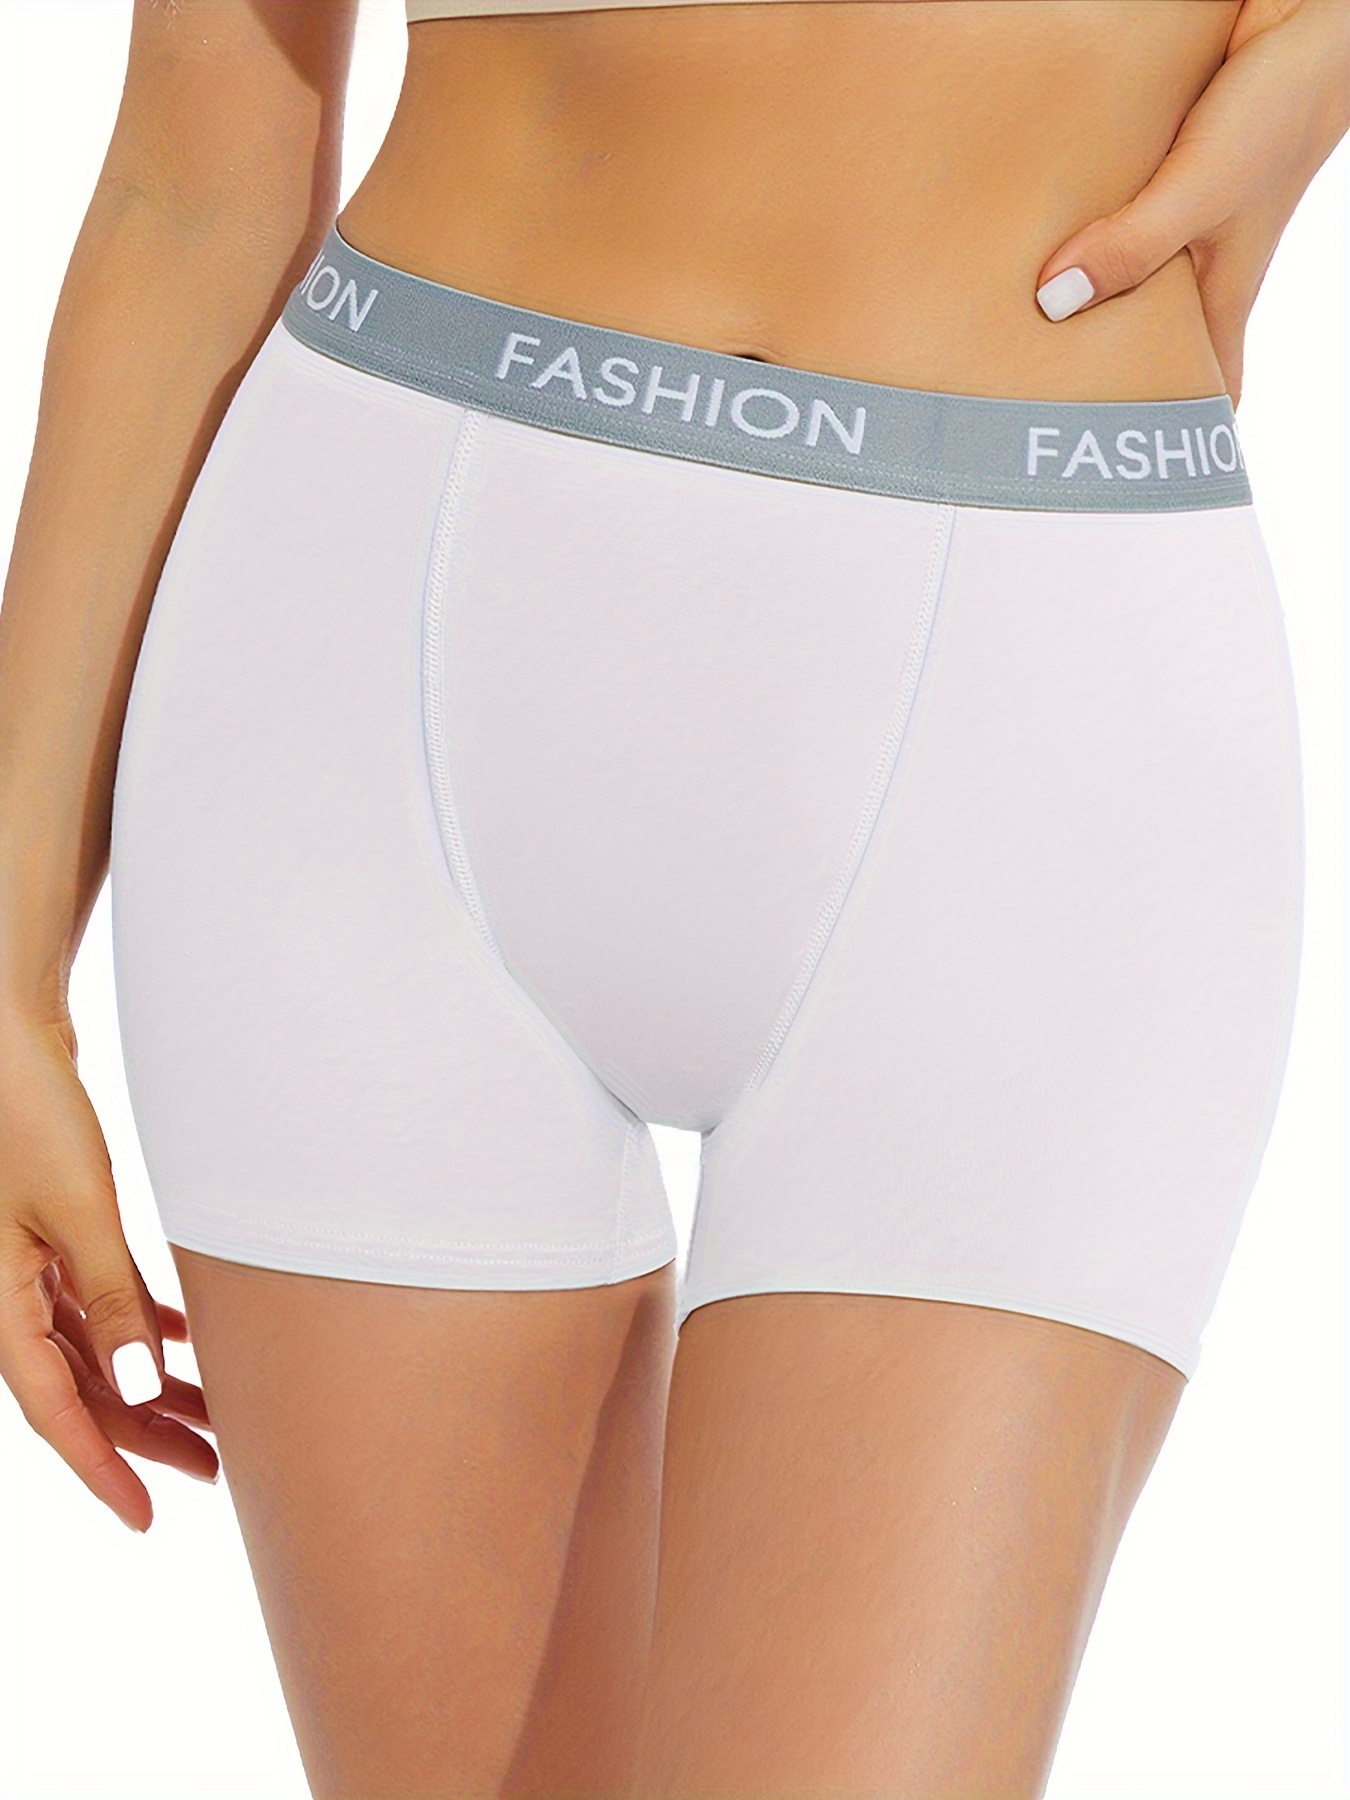 Women's boyshort panty stretch cotton white